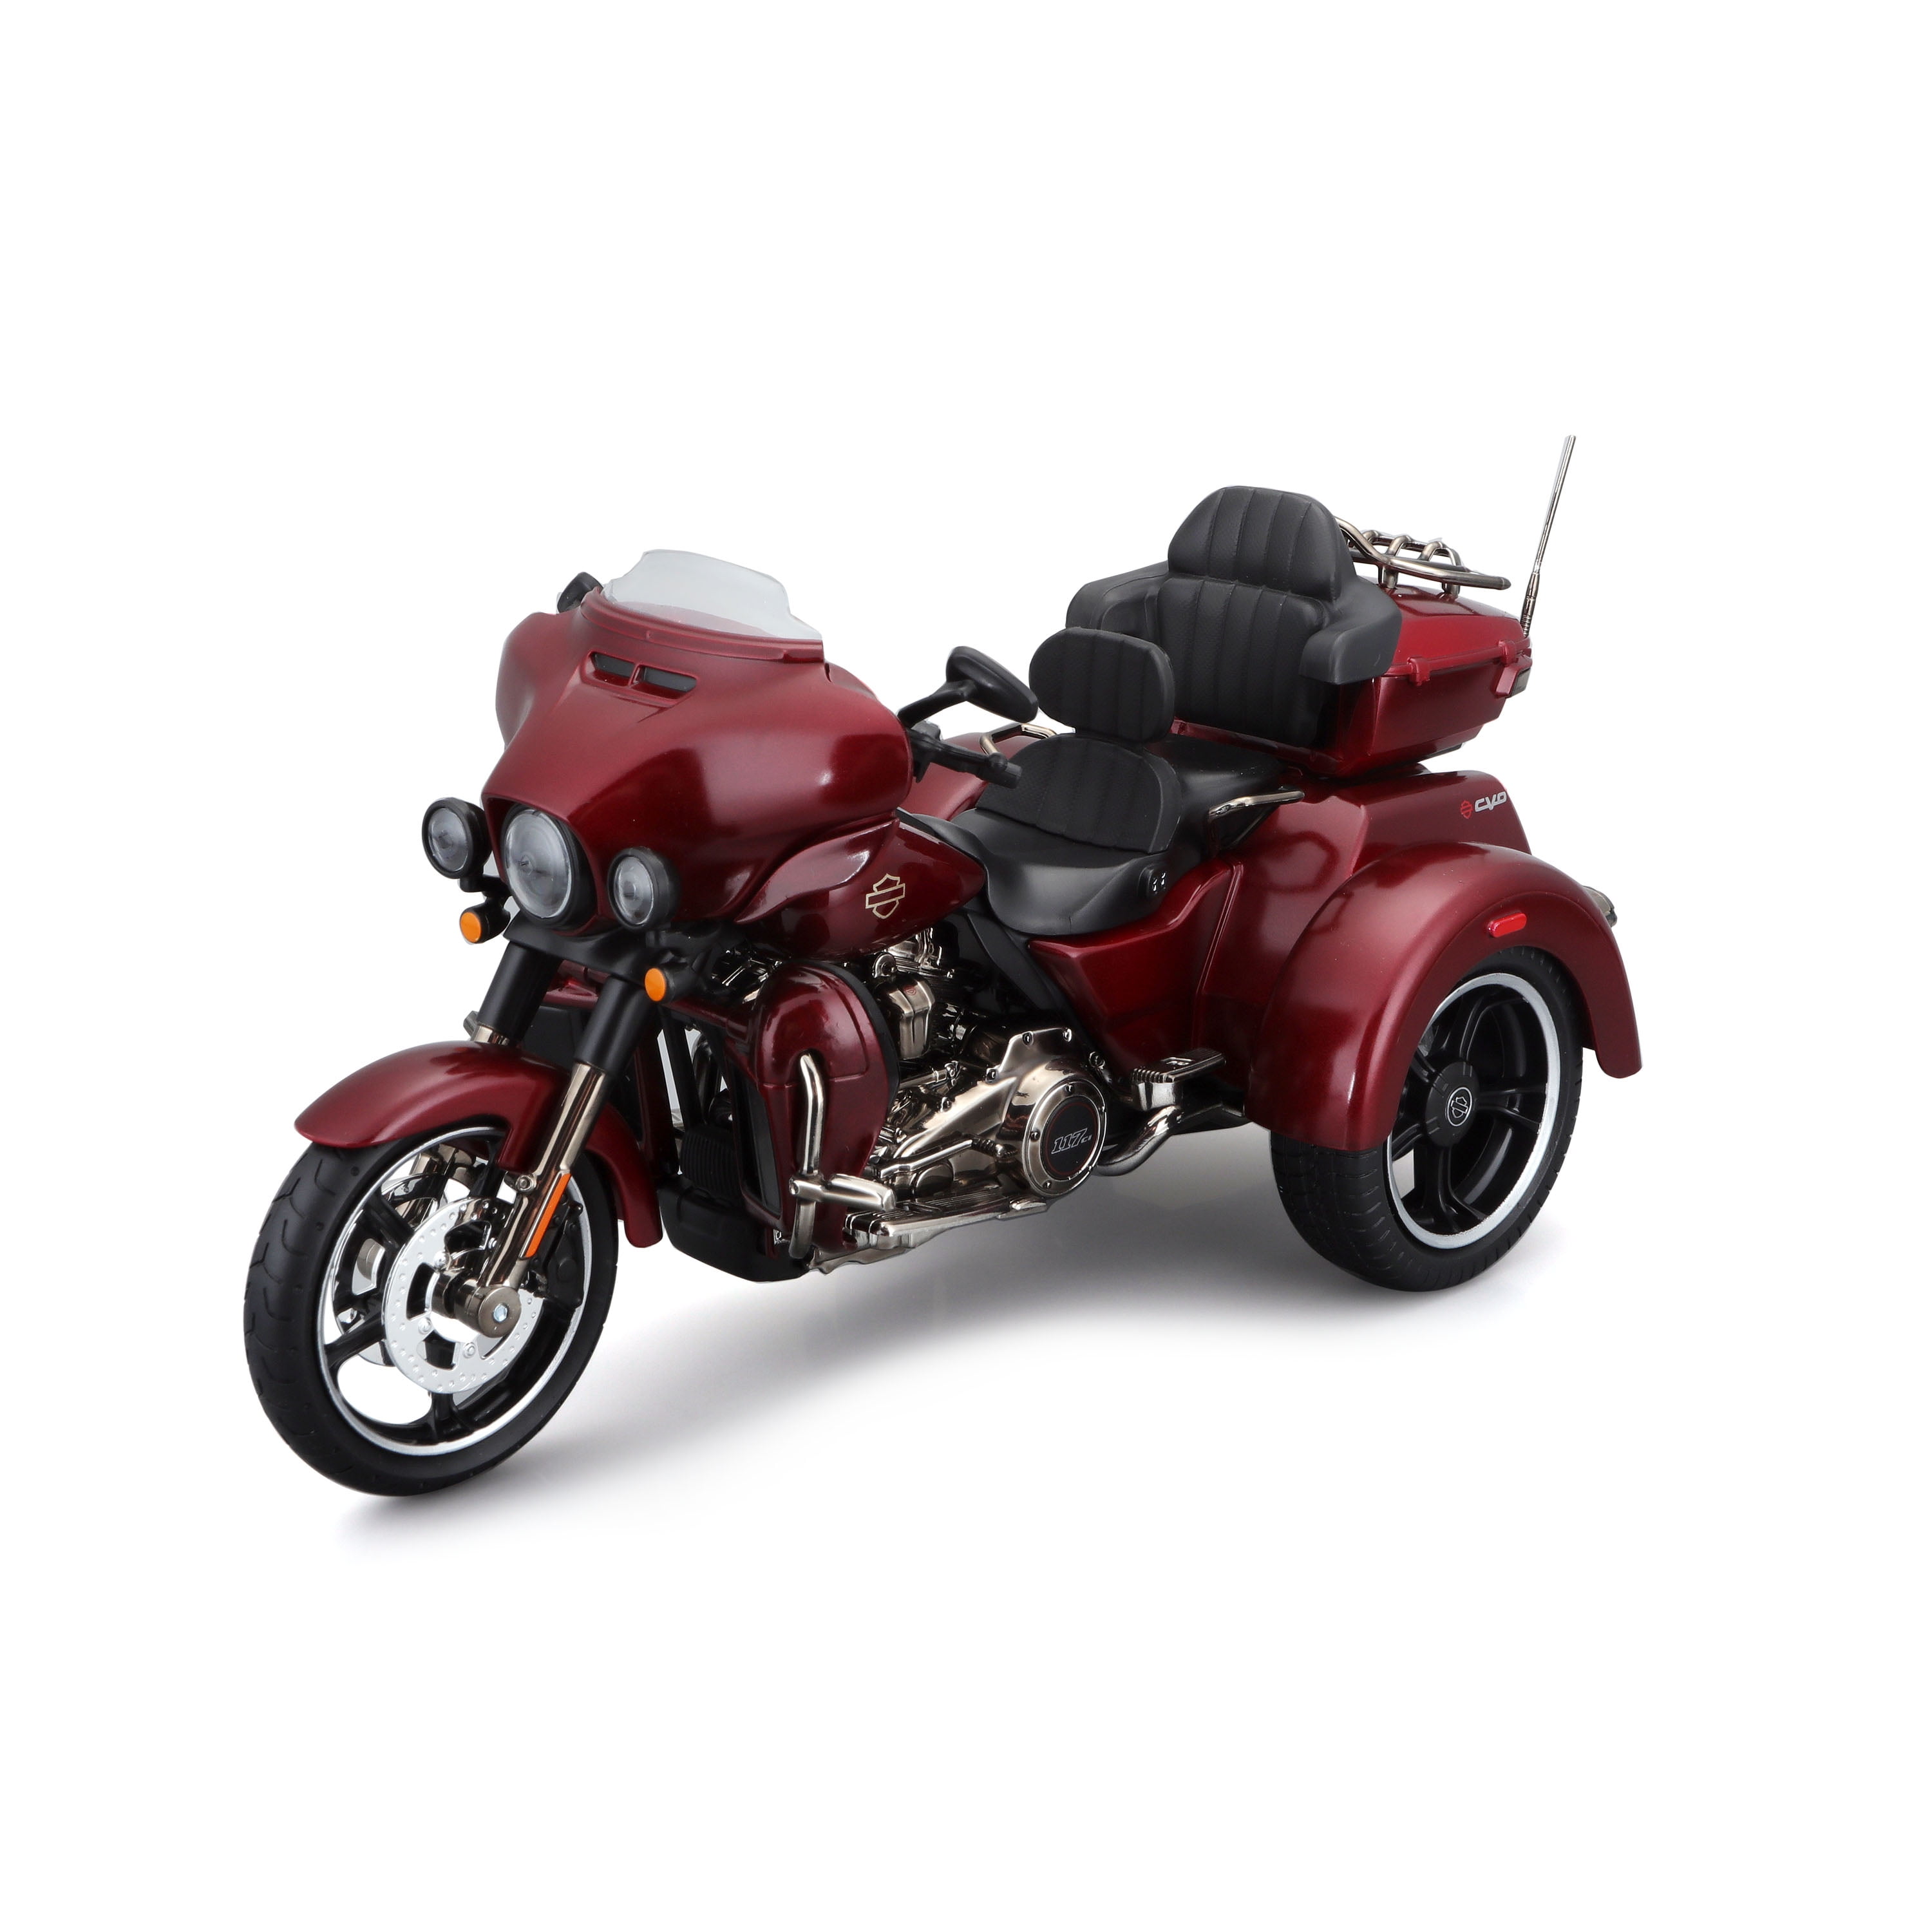 Maisto 1:12 Scale Harley Davidson 2021 CVO Tri Glide Motorcycle